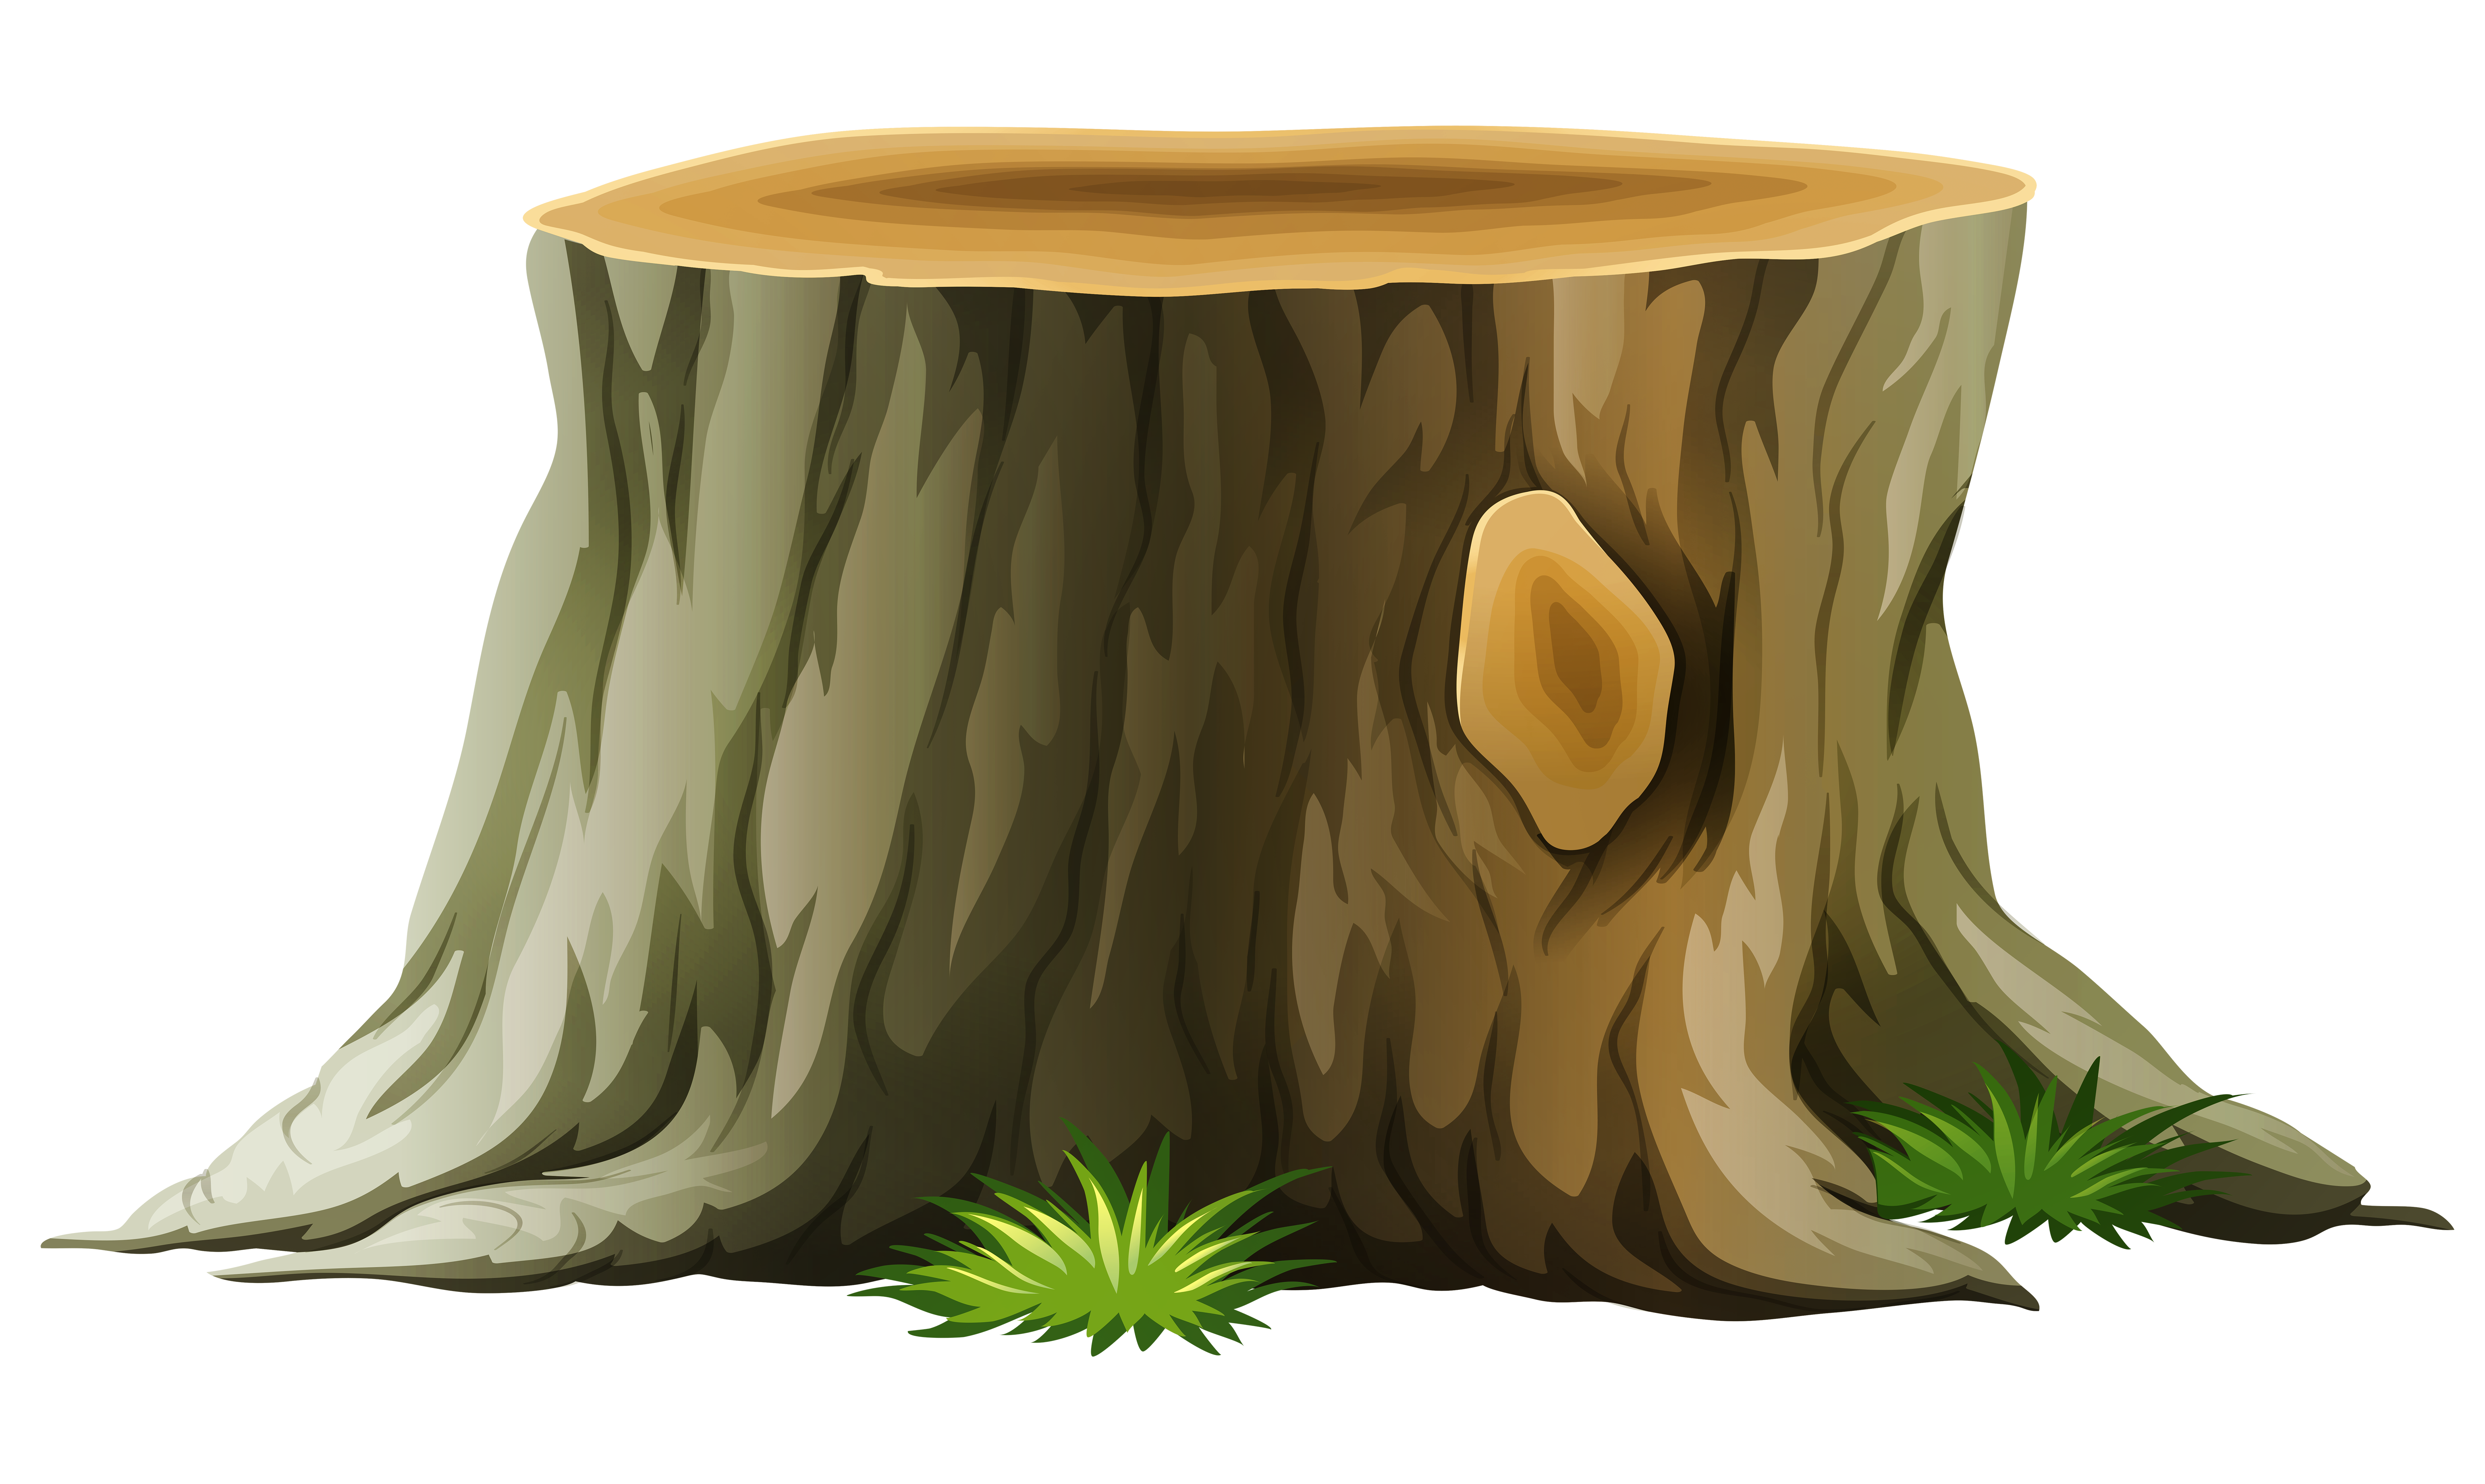 Cartoon Tree Stump Cliparts C